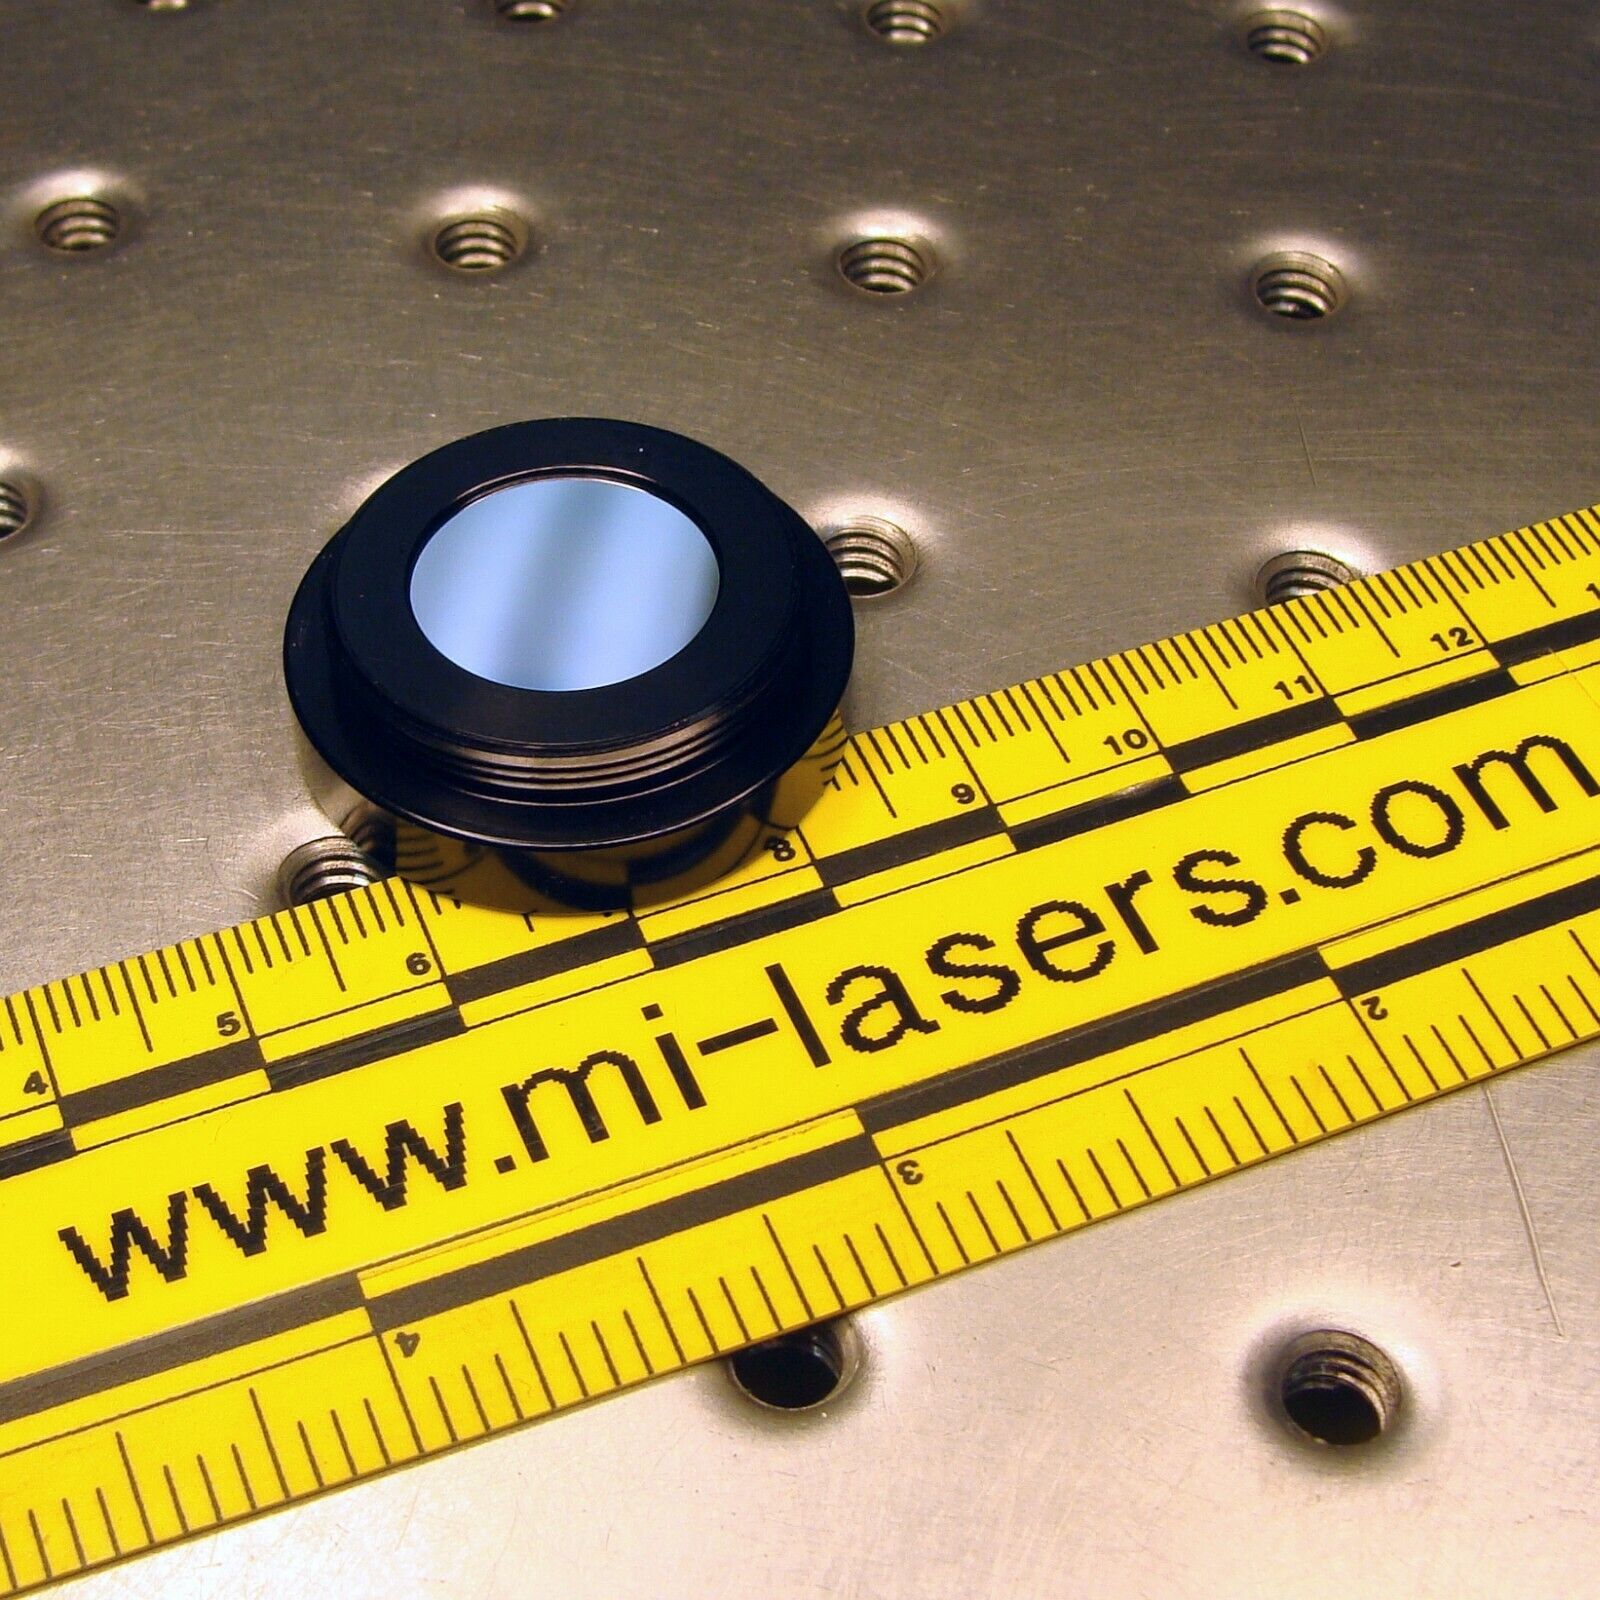 OPTICAL BANDPASS FILTER 800nm / 20nm, with C-MOUNT infrared ir light laser diode